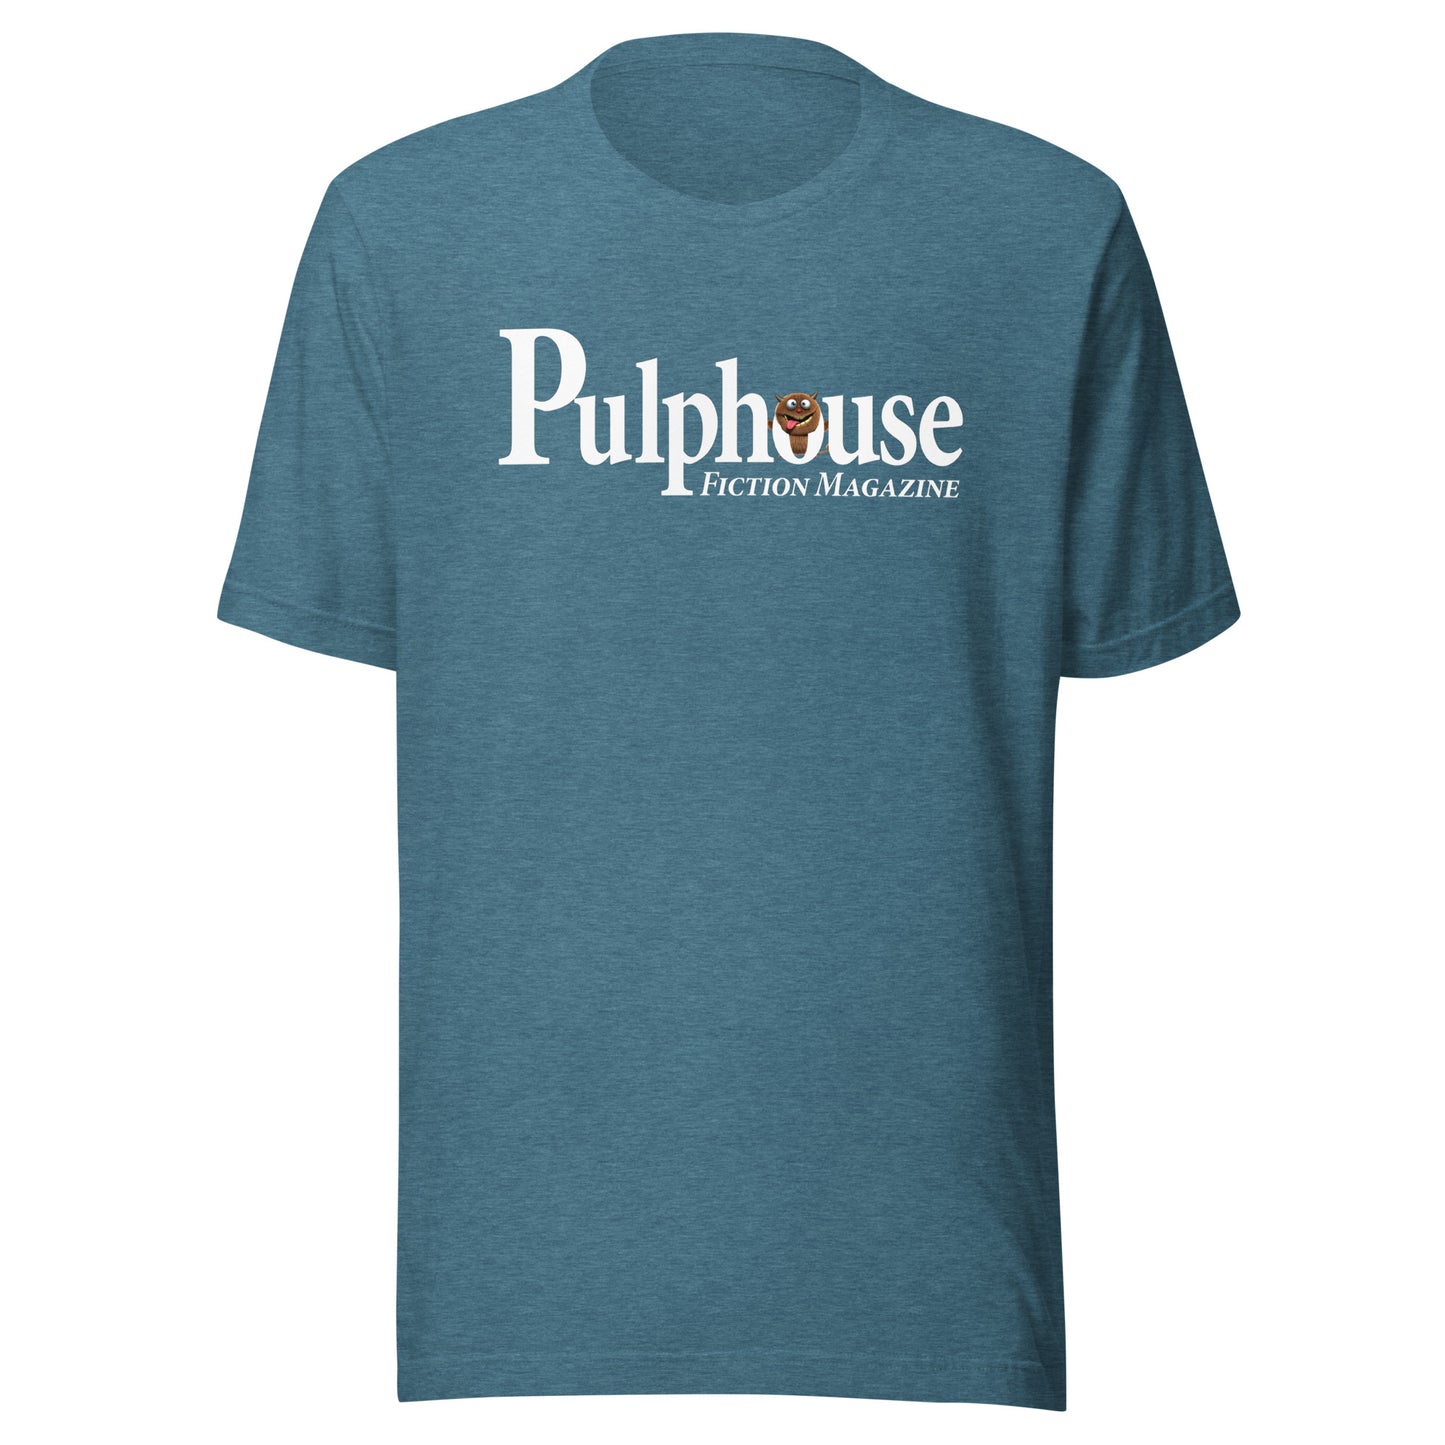 Comfy PULPHOUSE LOGO T-SHIRT - Pulphouse Fiction Magazine Short Sleeve T-Shirt